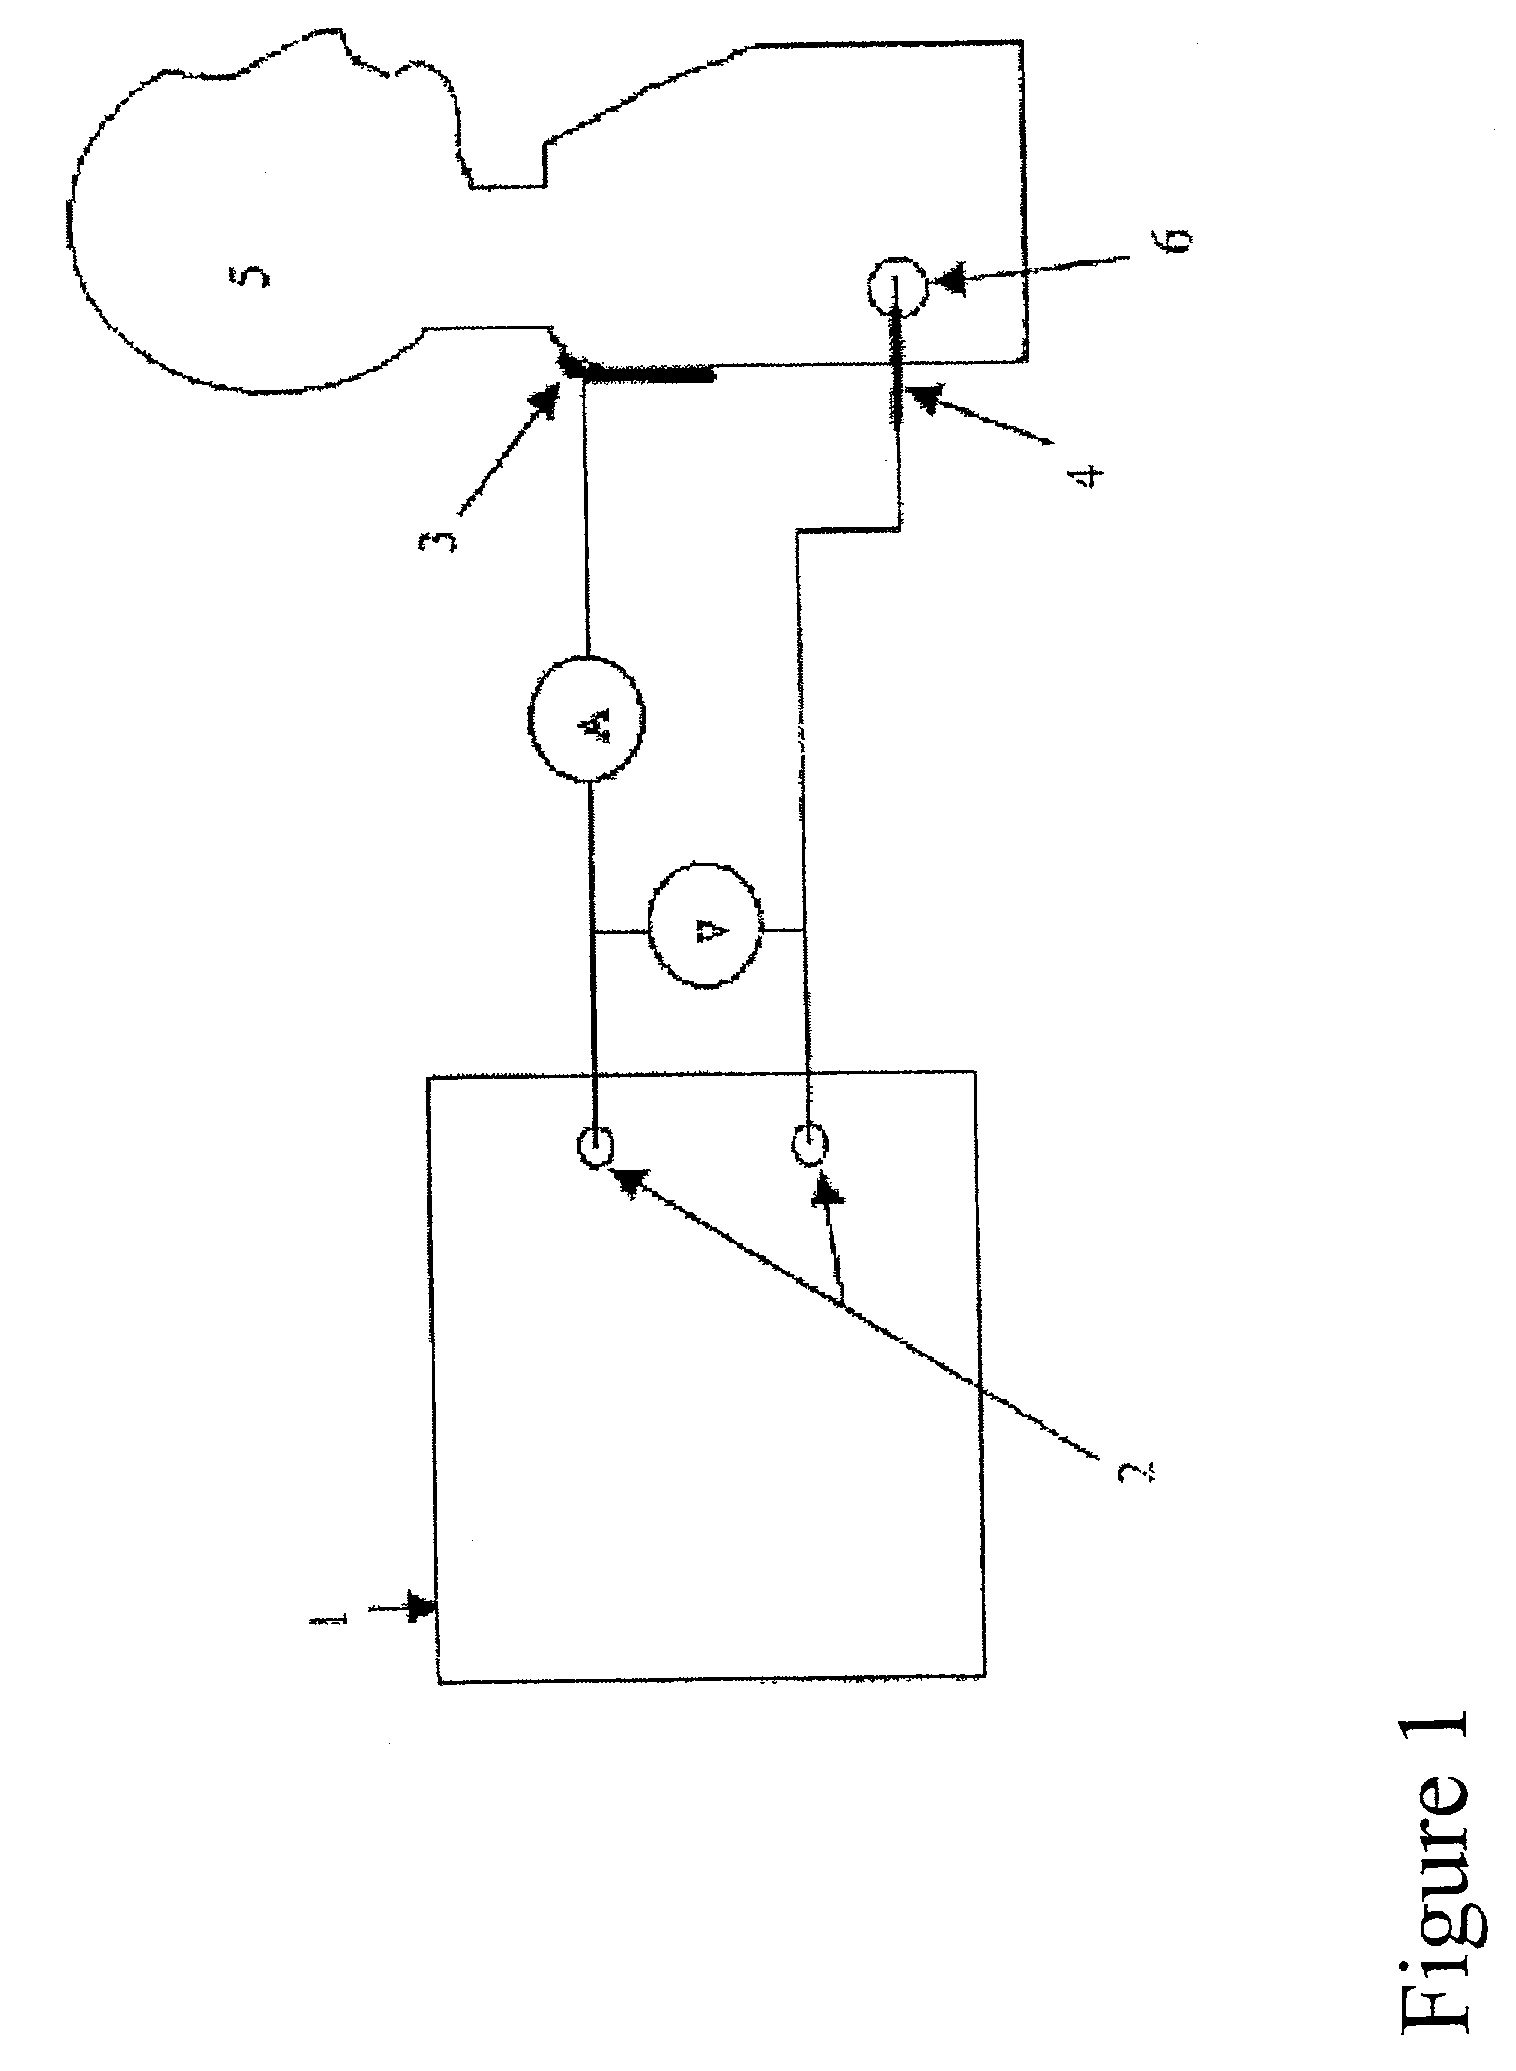 Computerized electrical signal generator